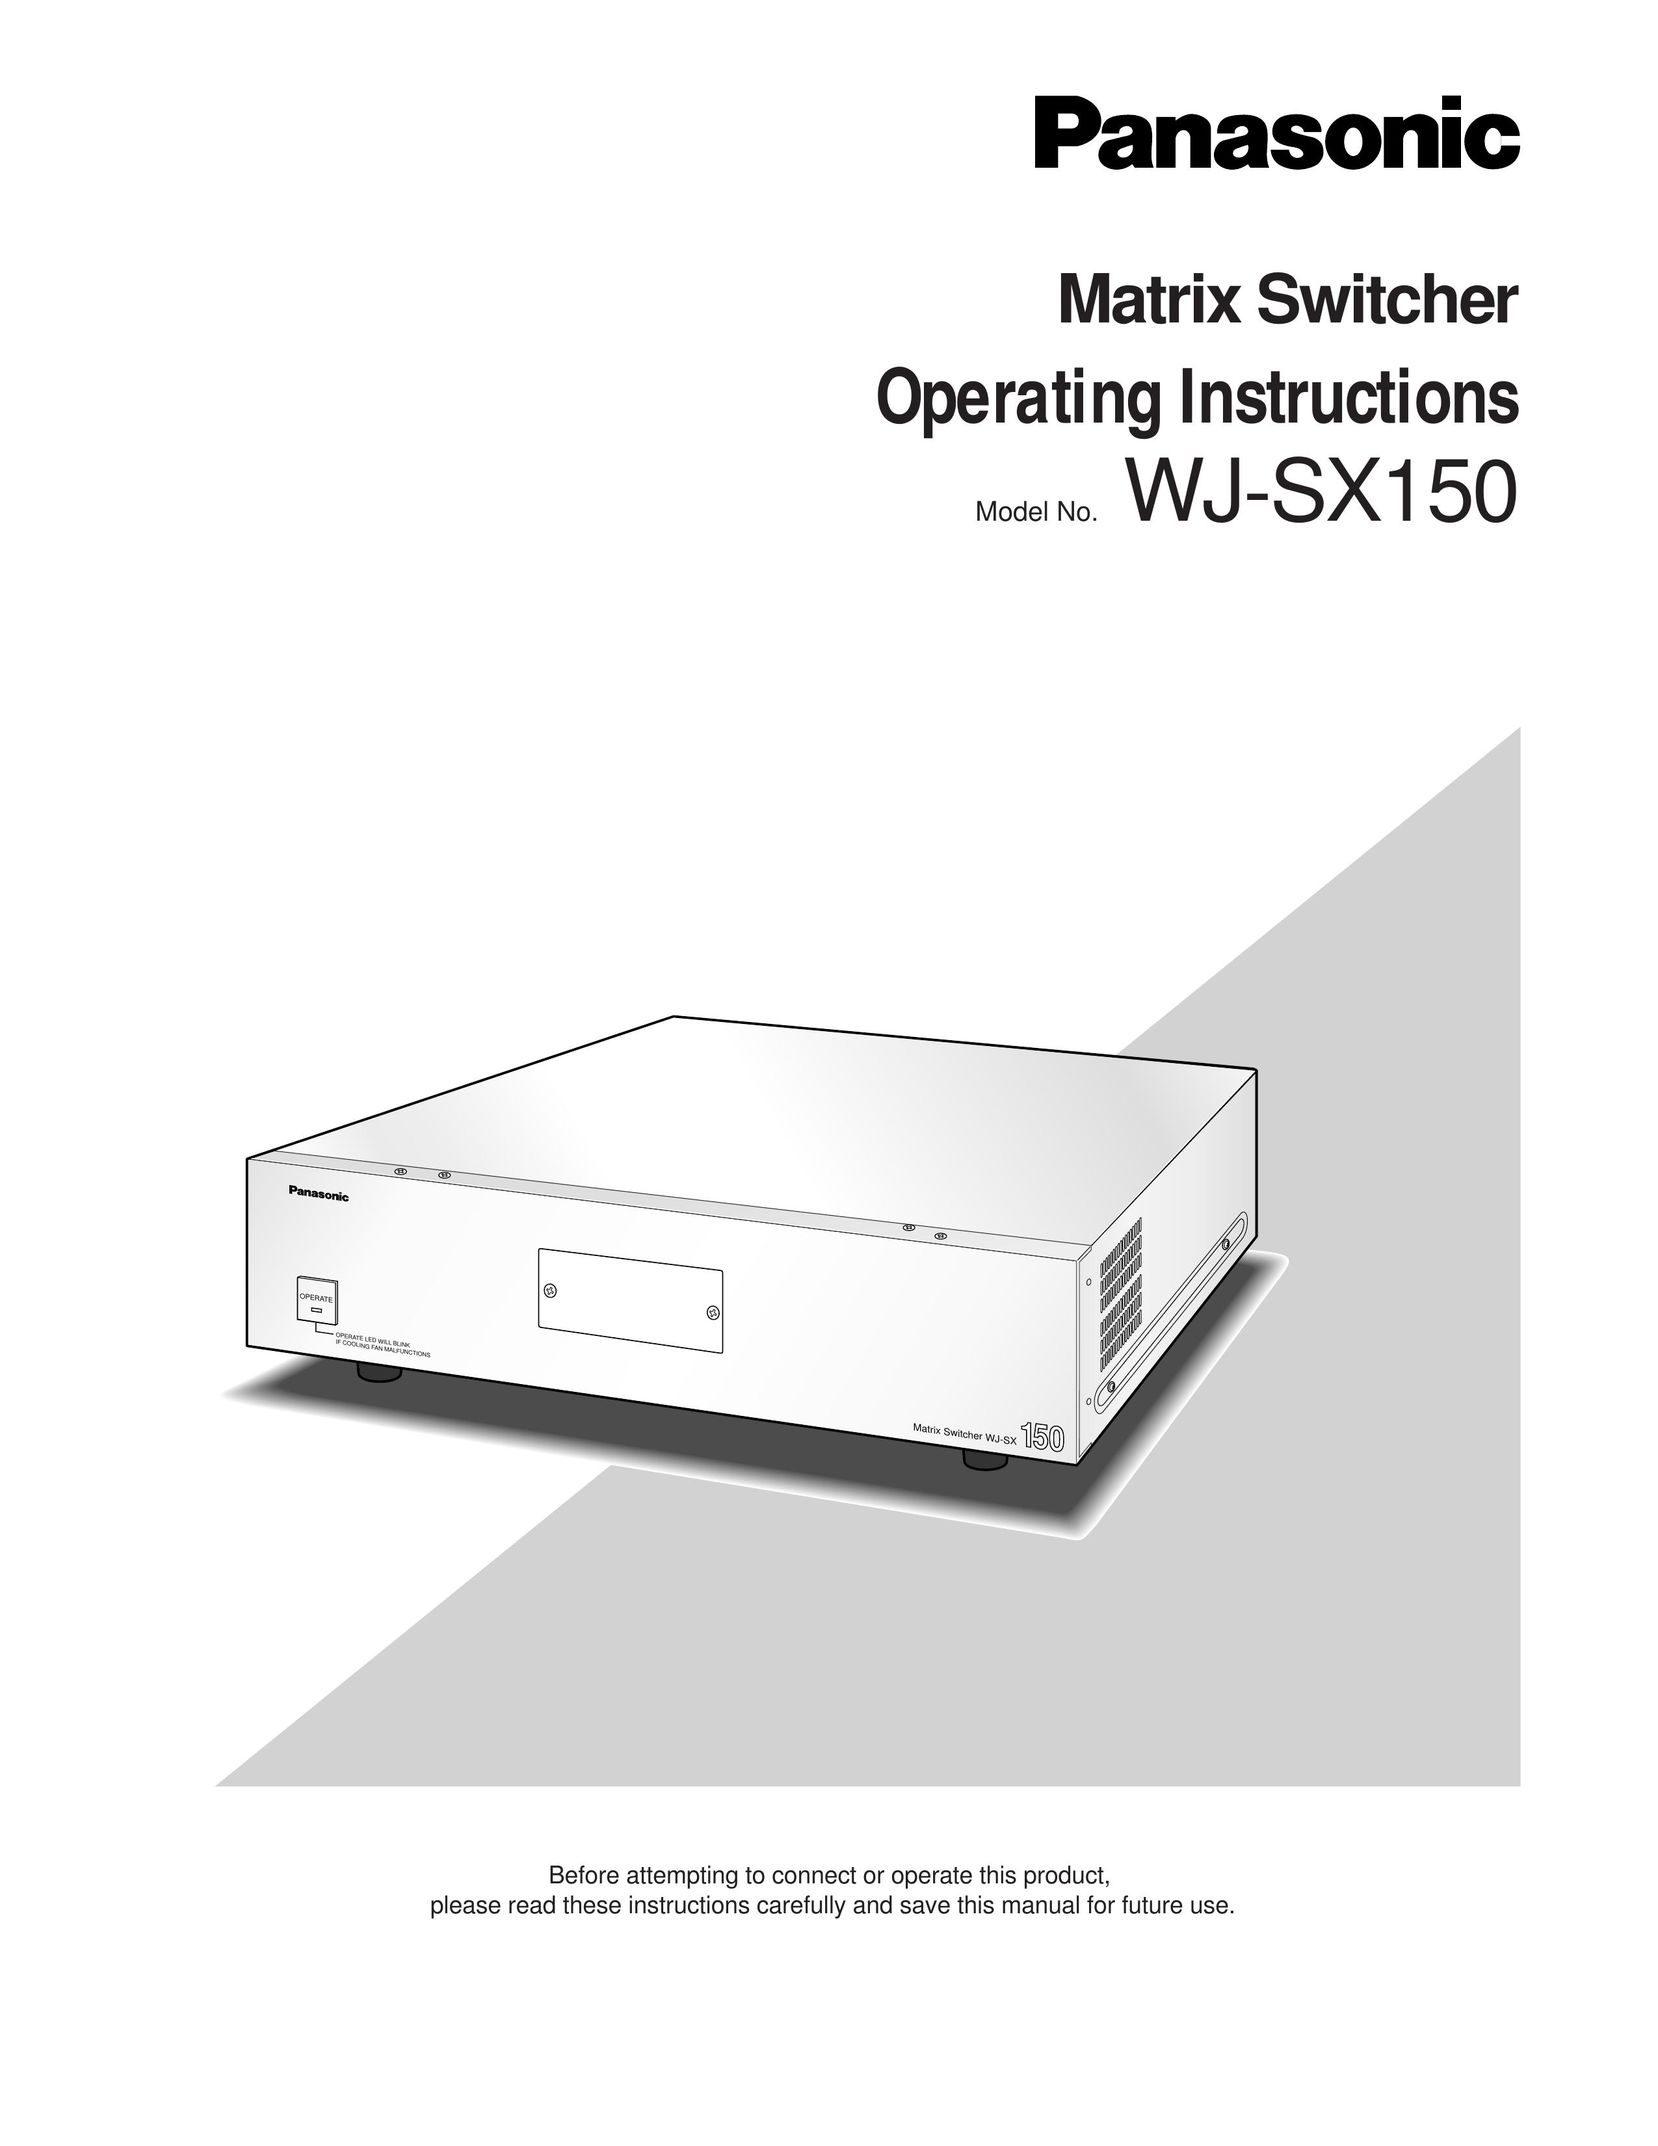 Panasonic WJ-SX 150 Network Router User Manual